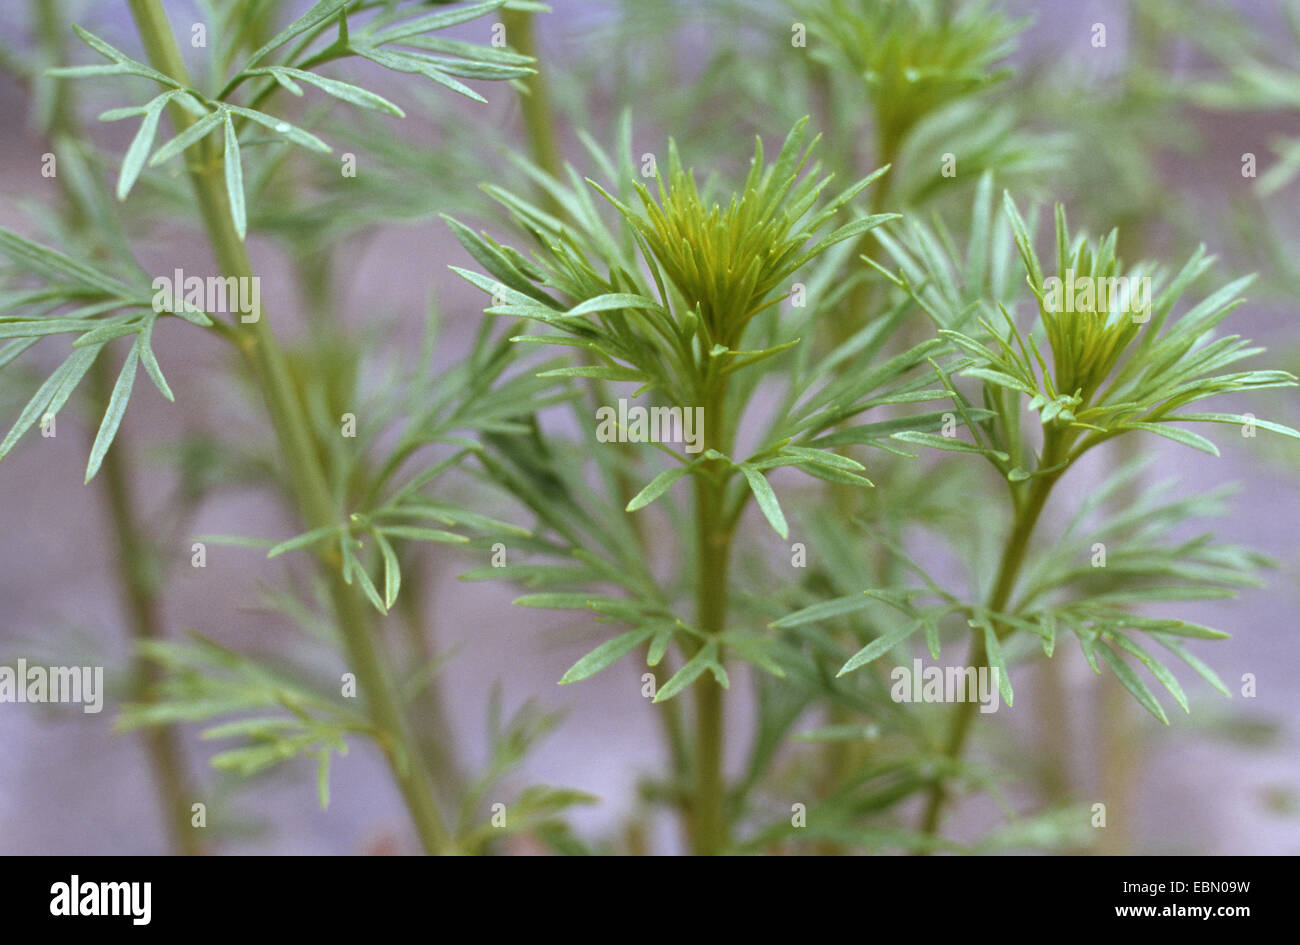 Zygophyllaceae Immagini e Fotos Stock - Alamy